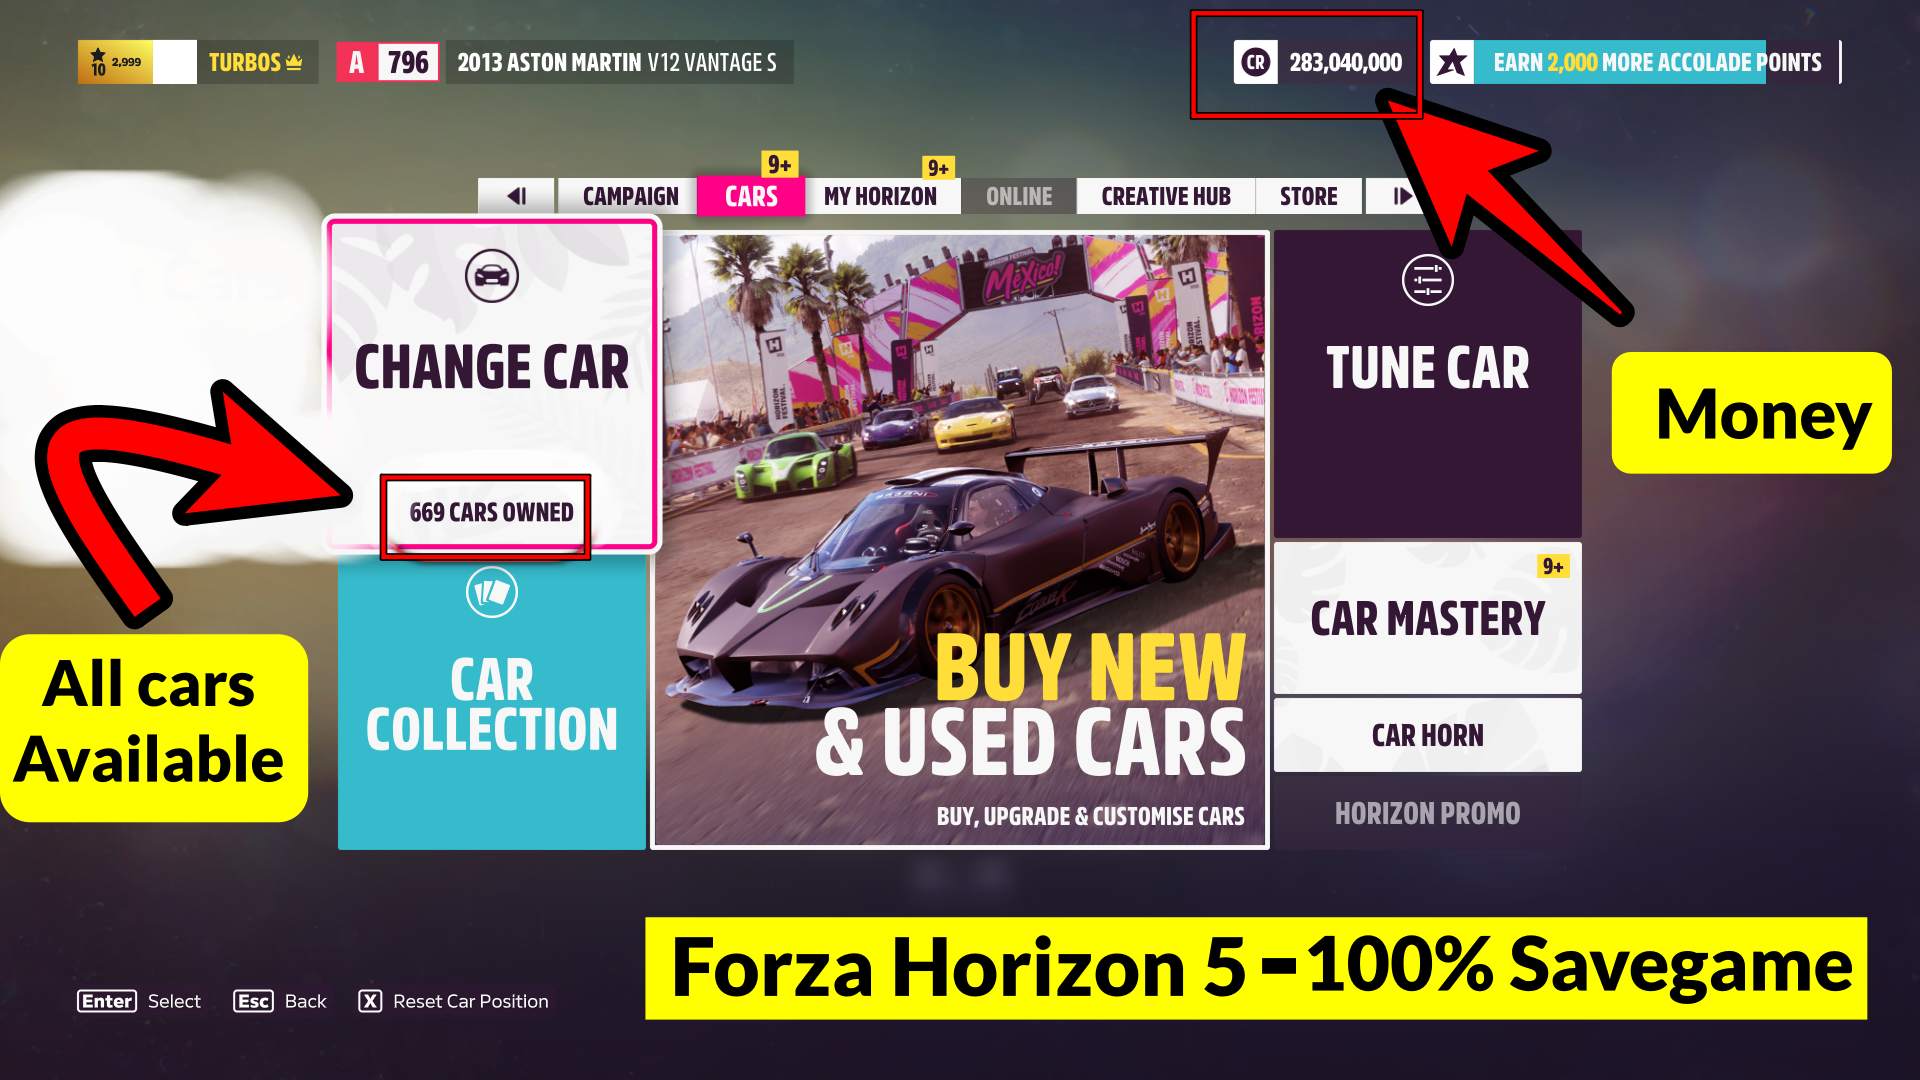 Forza Horizon 5 Savegame PC -100% – All cars Unlocked